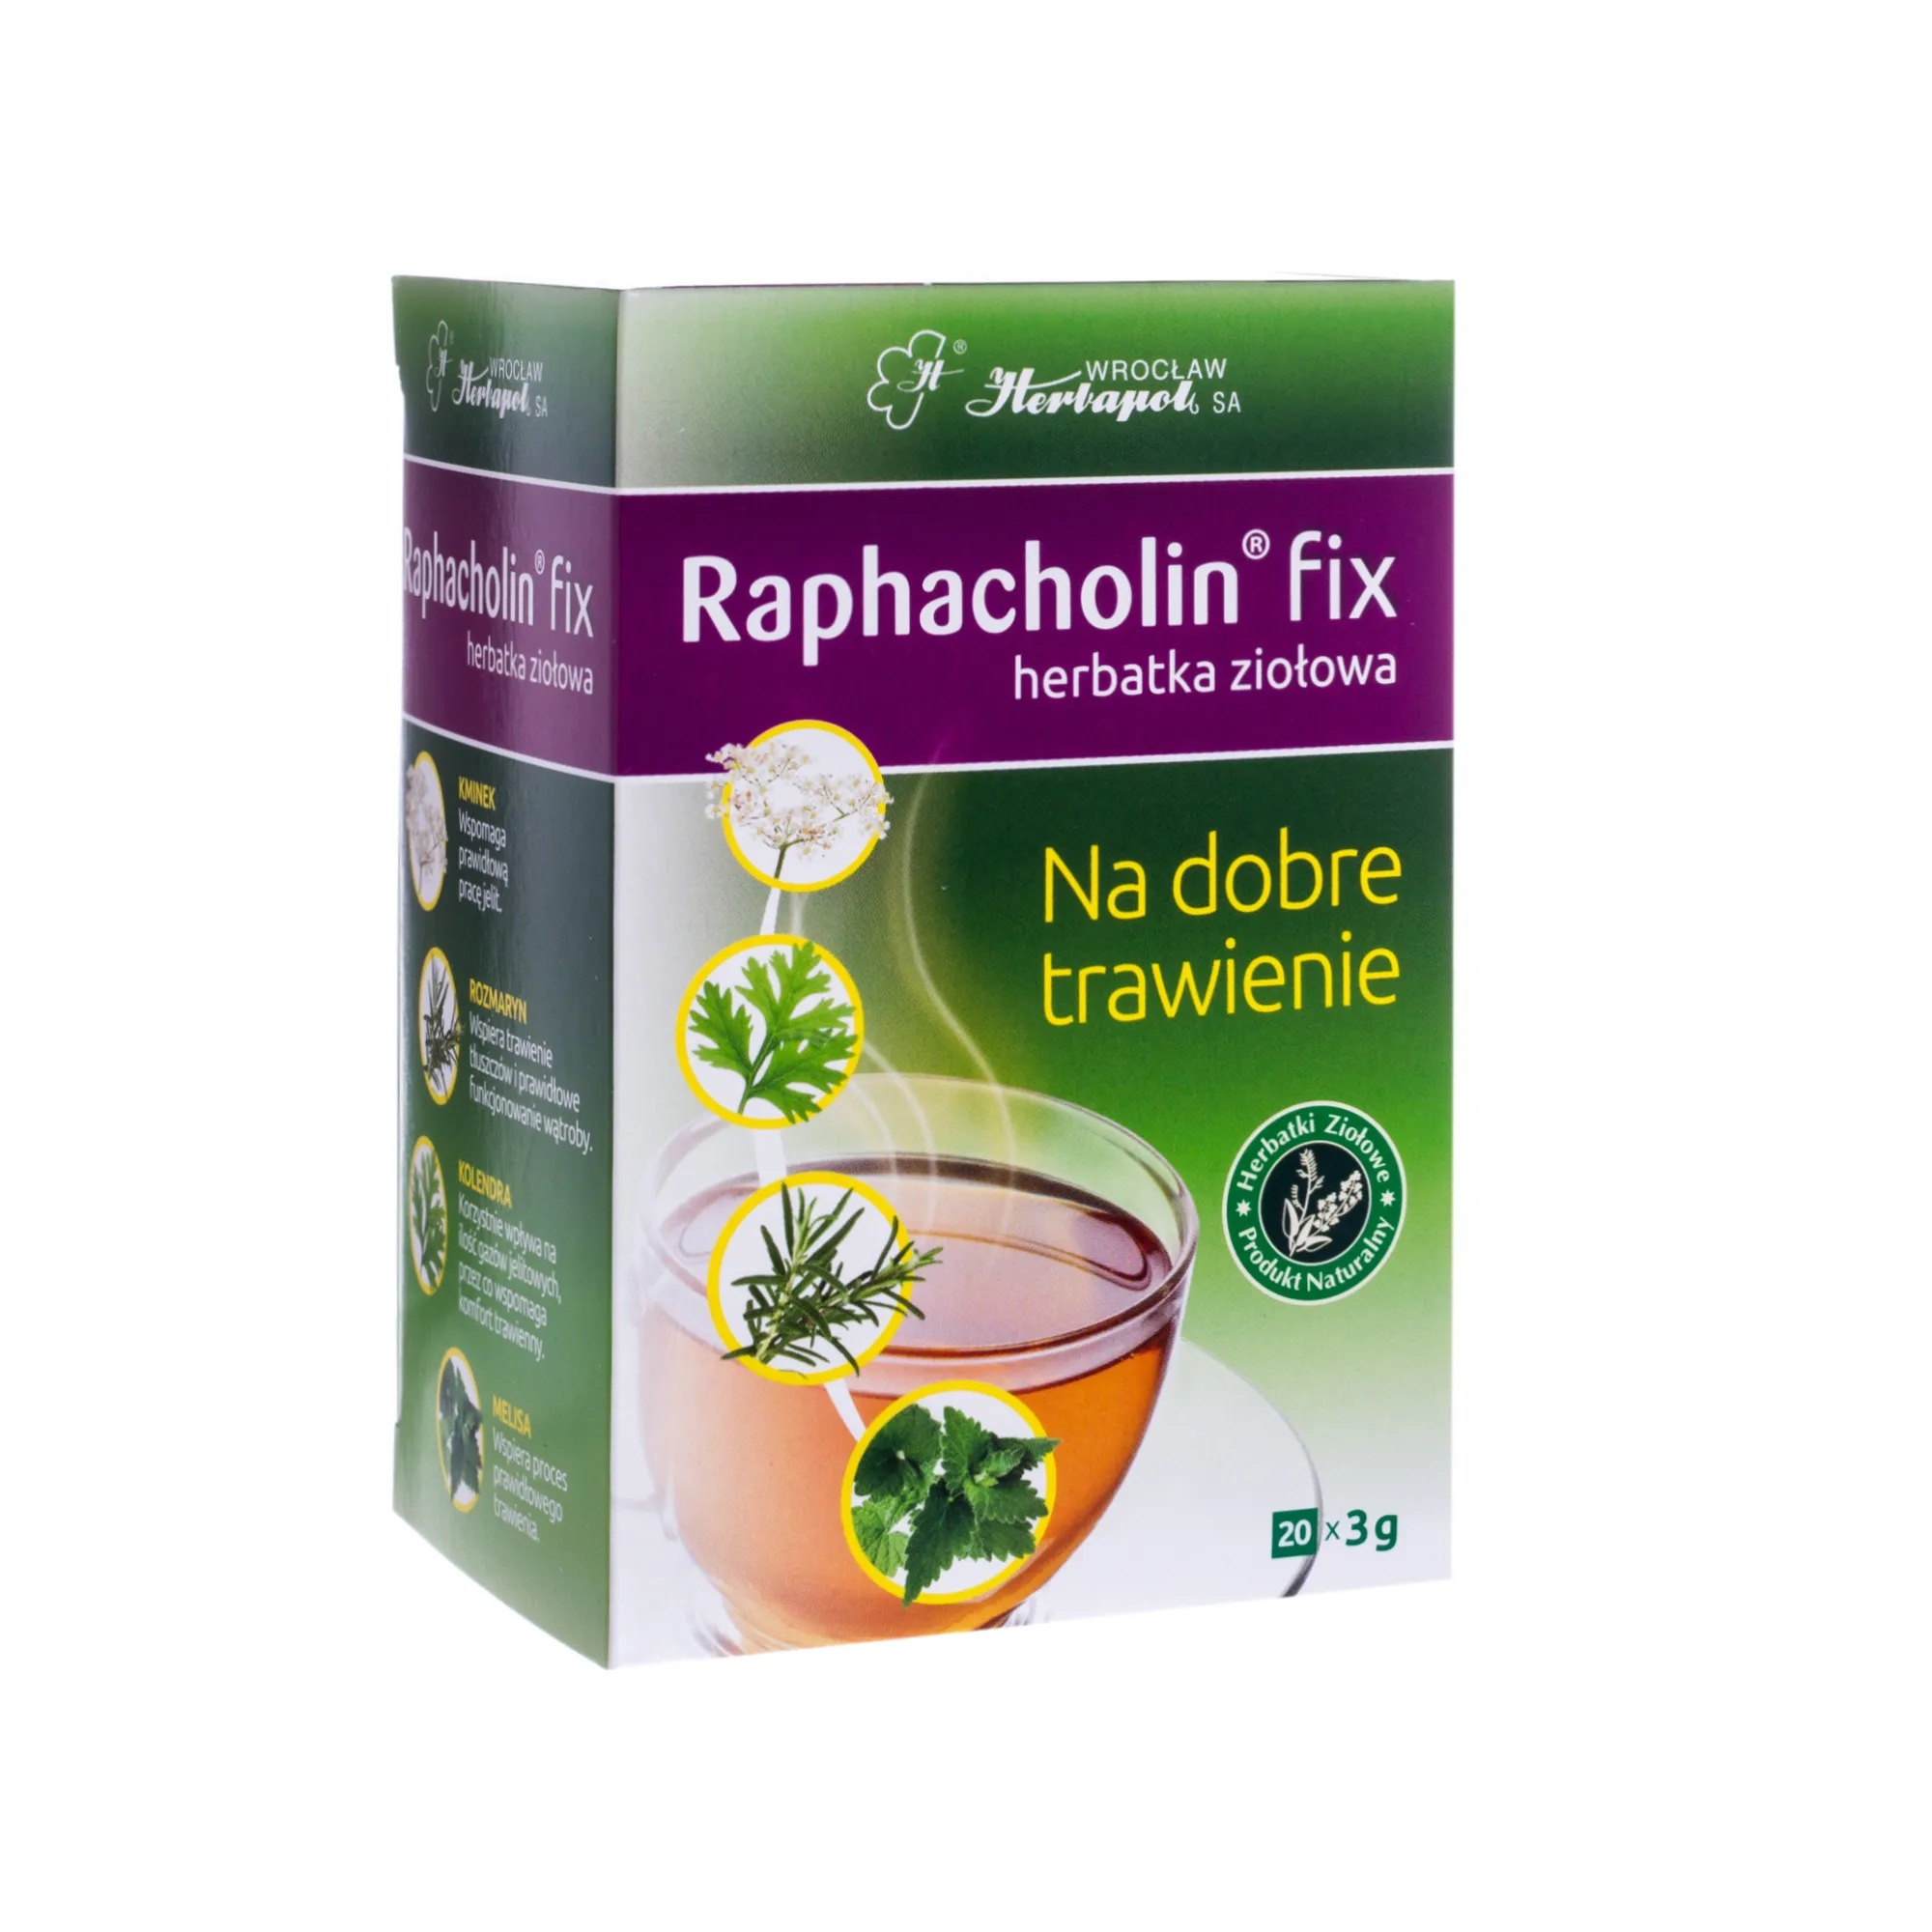 Raphacholin fix, suplement diety, 20 saszetek